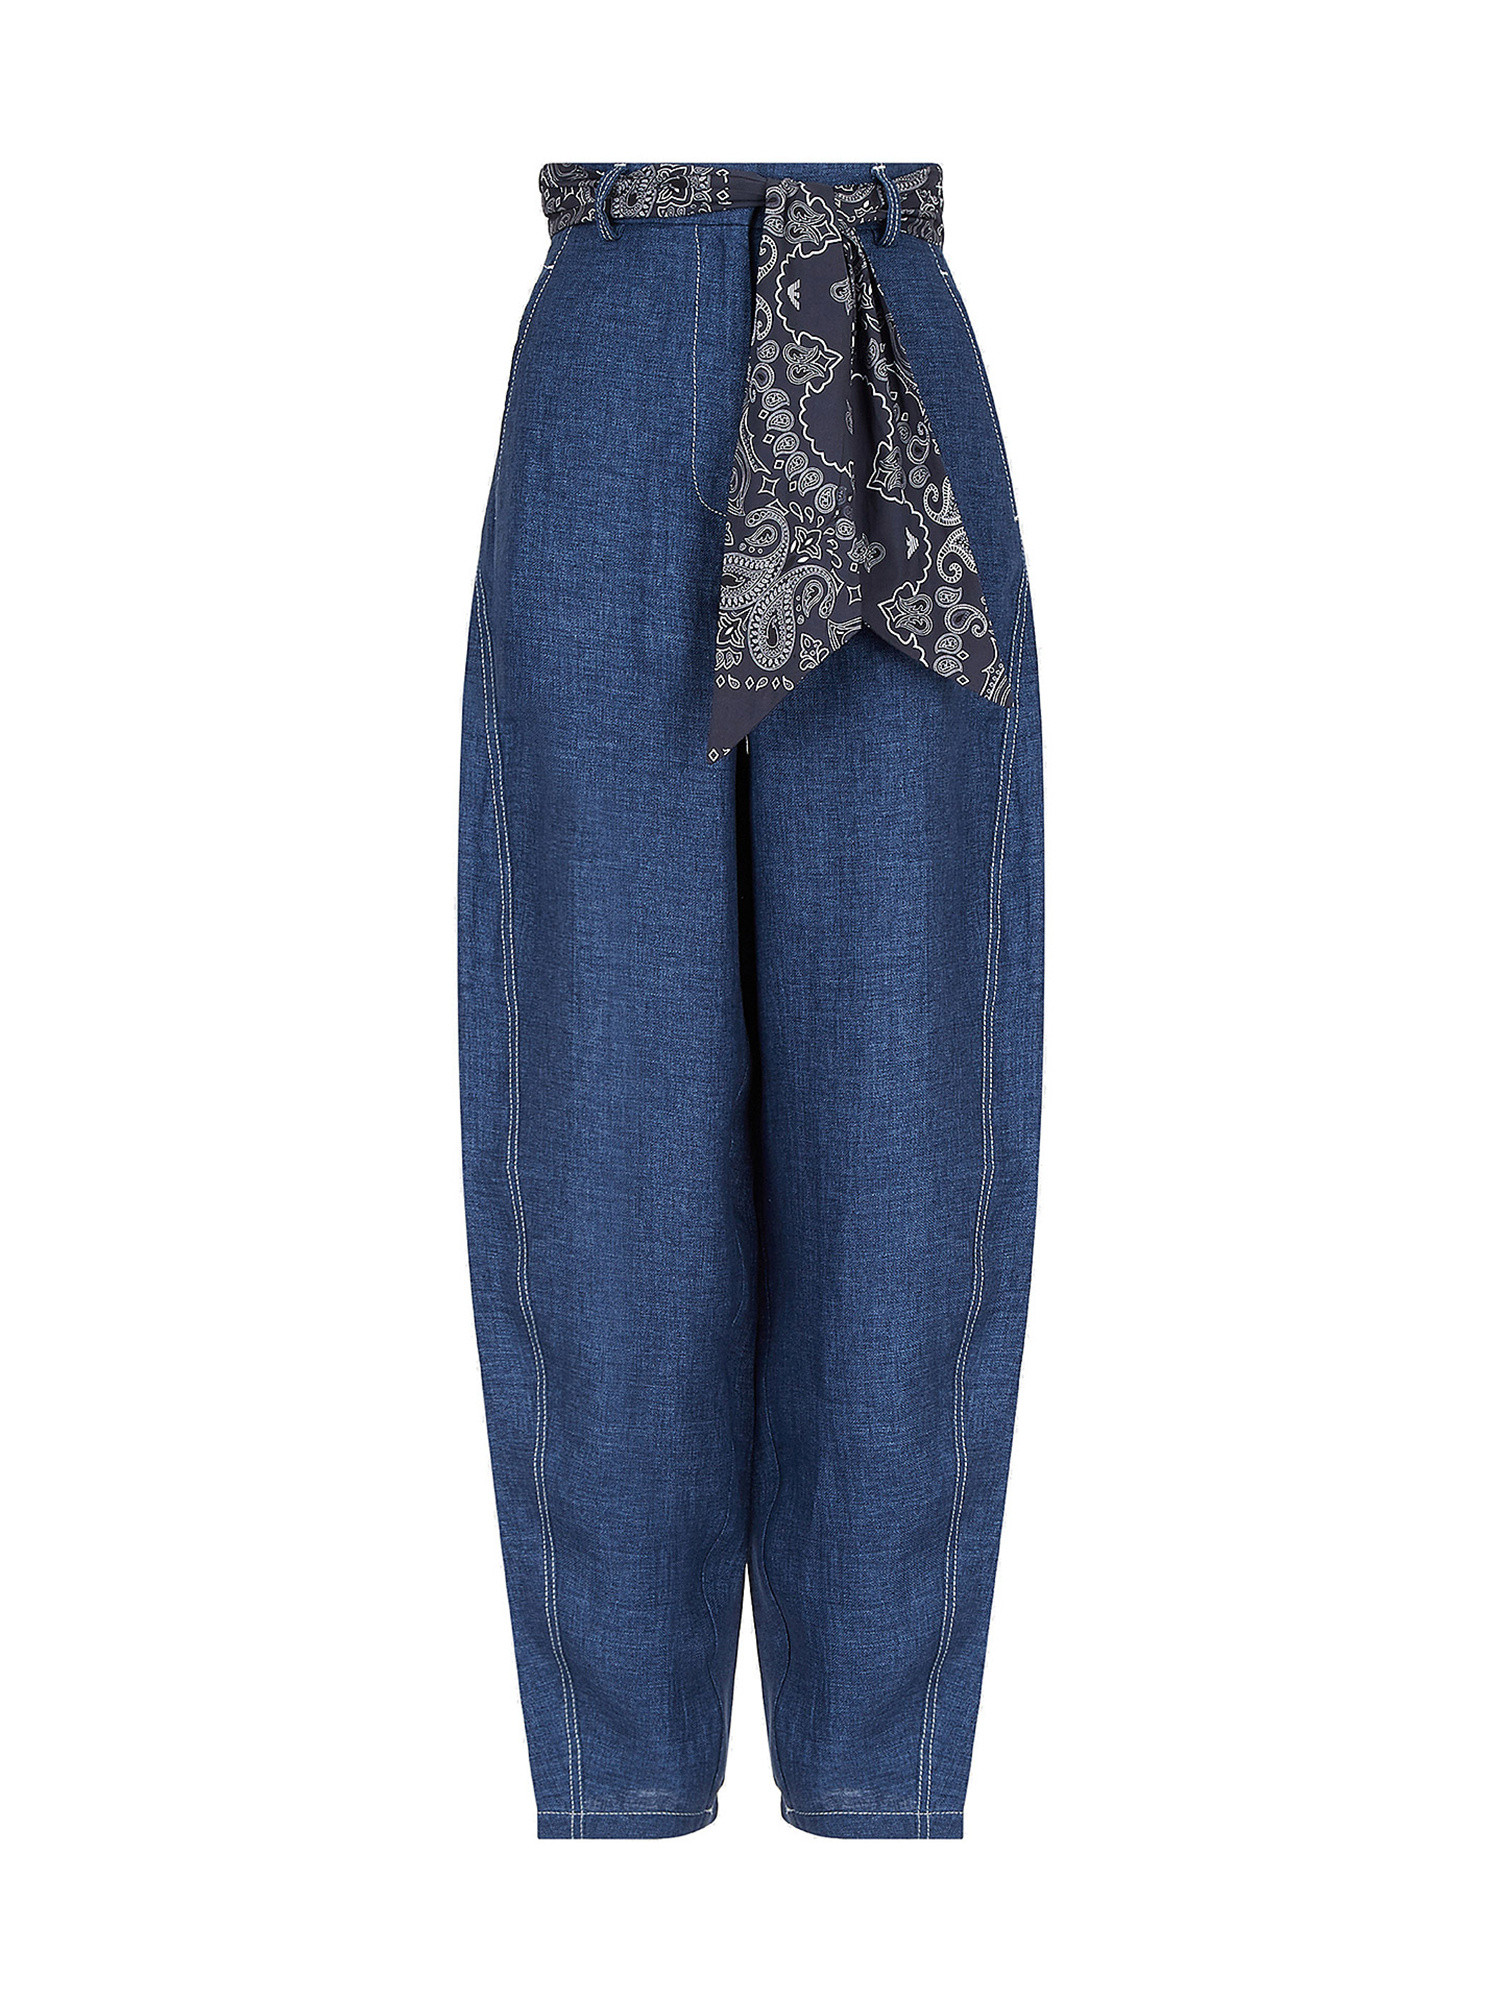 Pantalone 5 tasche, Blu, large image number 0